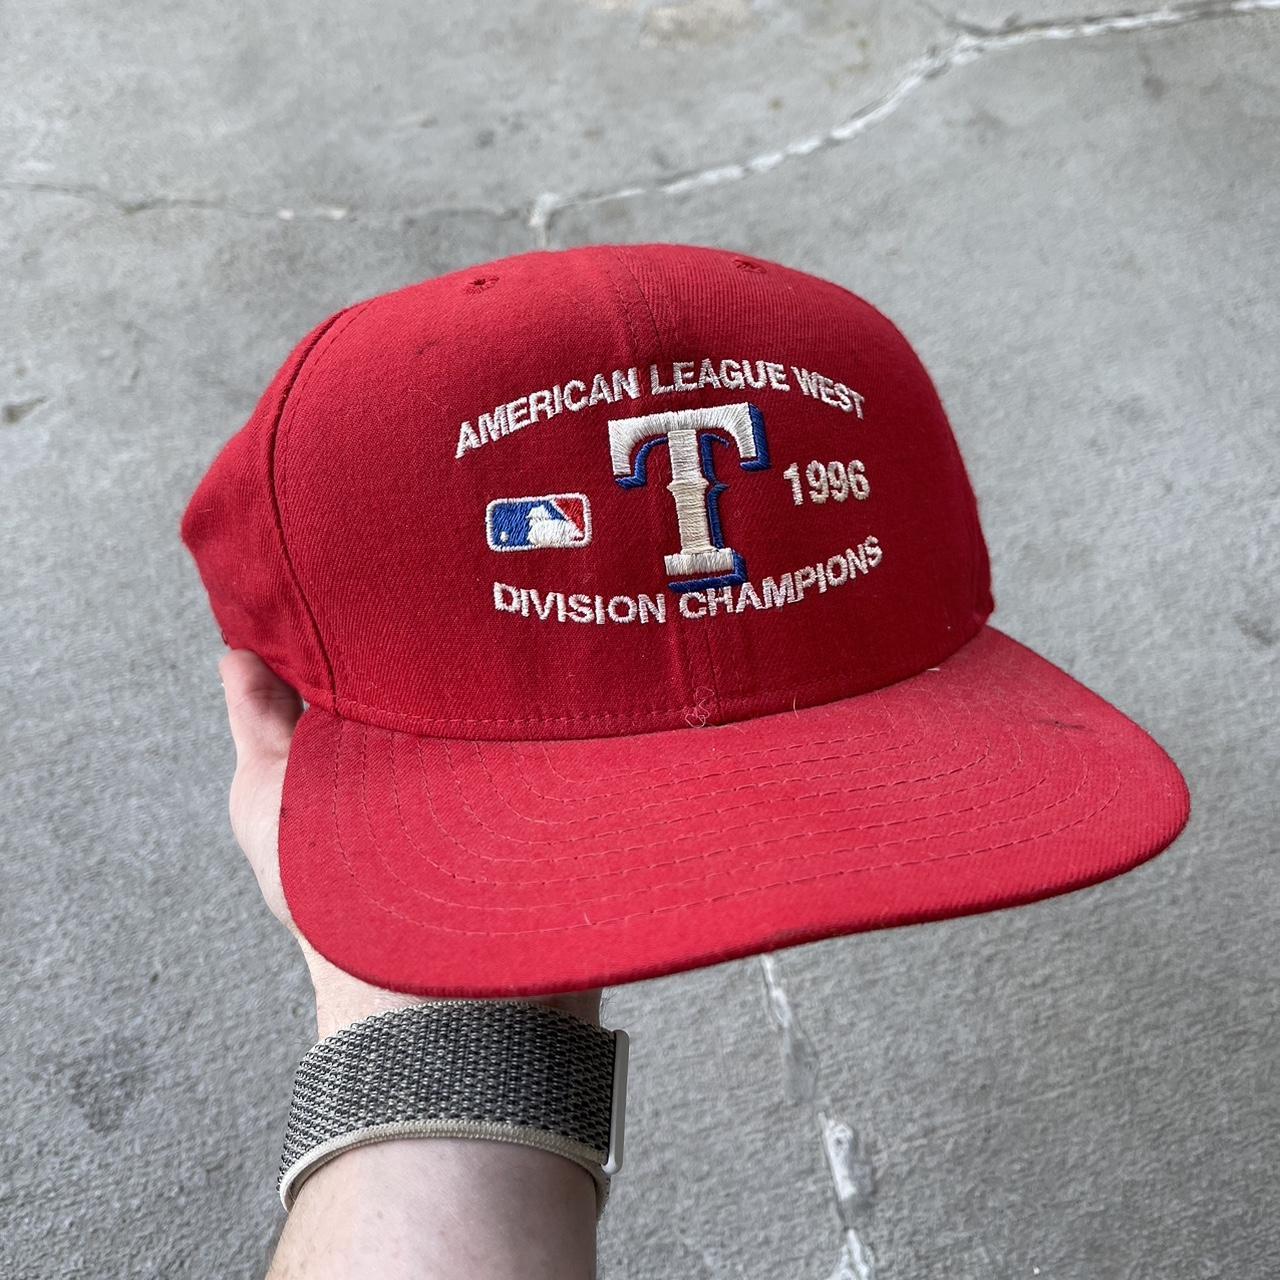 Vintage 90s Texas Rangers Snapback Hat 